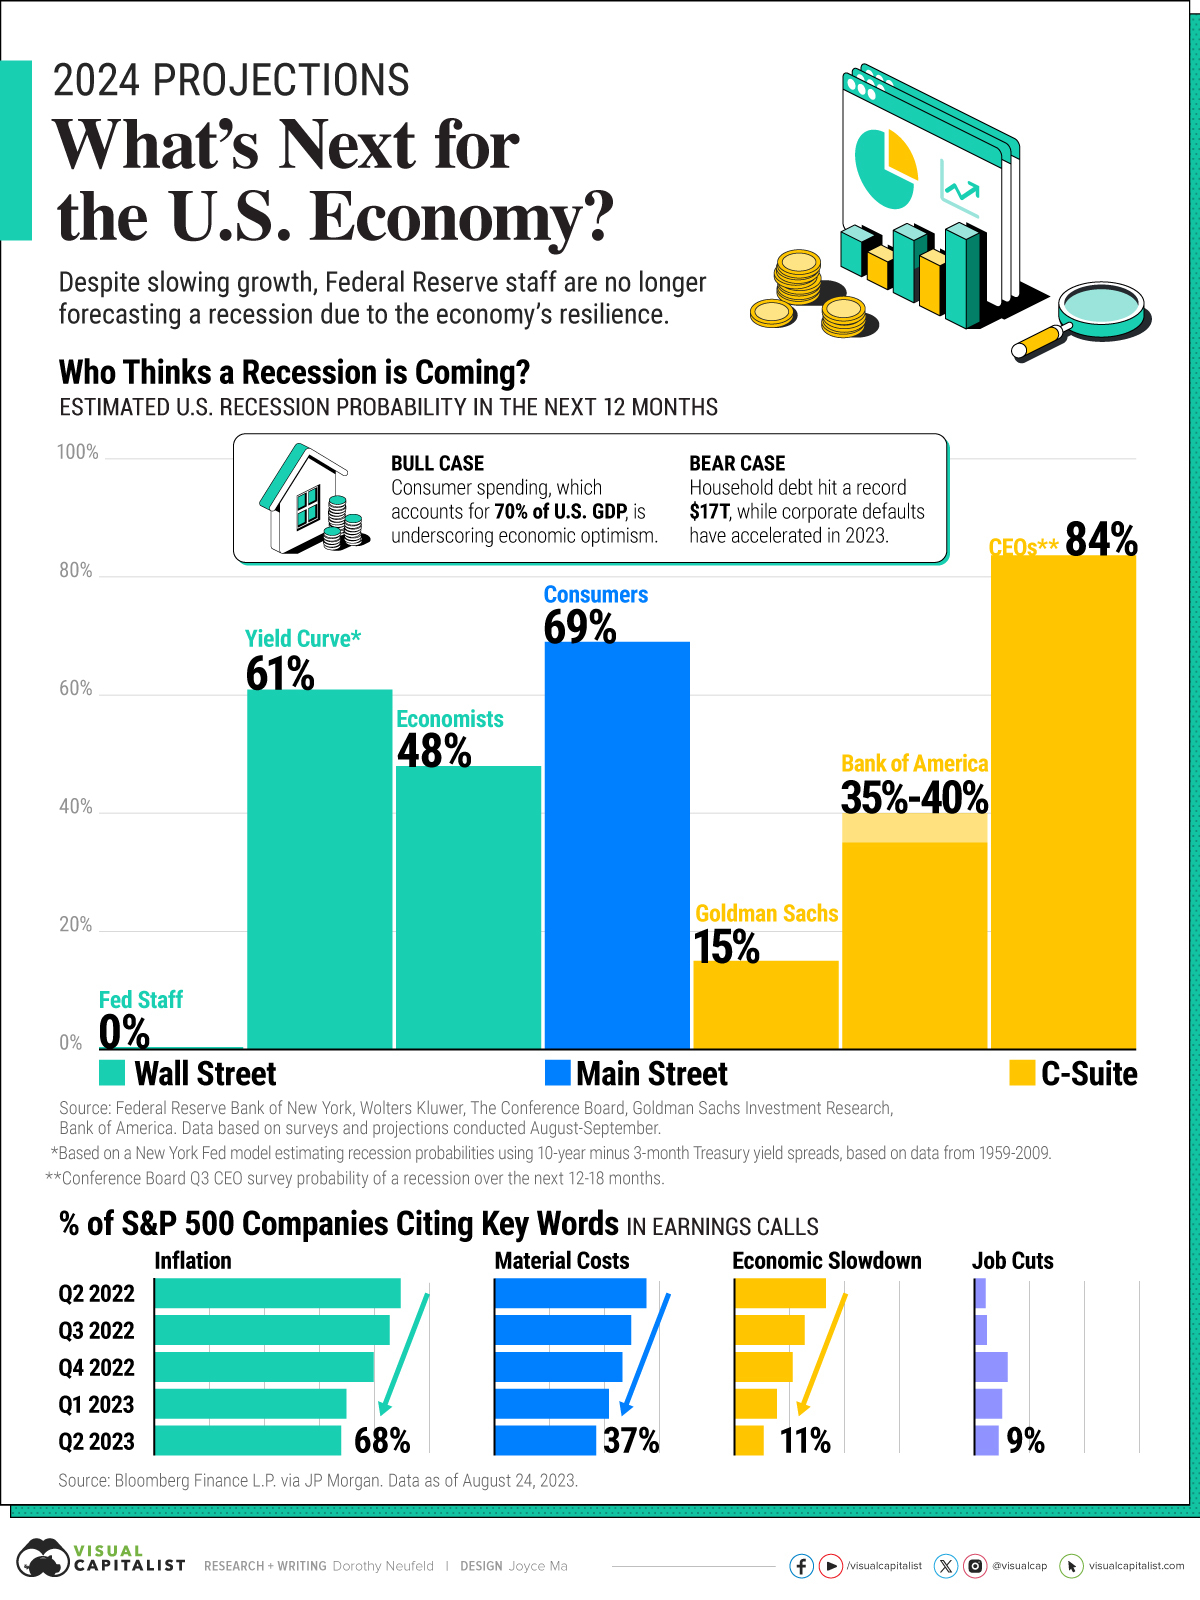 Visualized: U.S. Economic Forecasts, in 2024